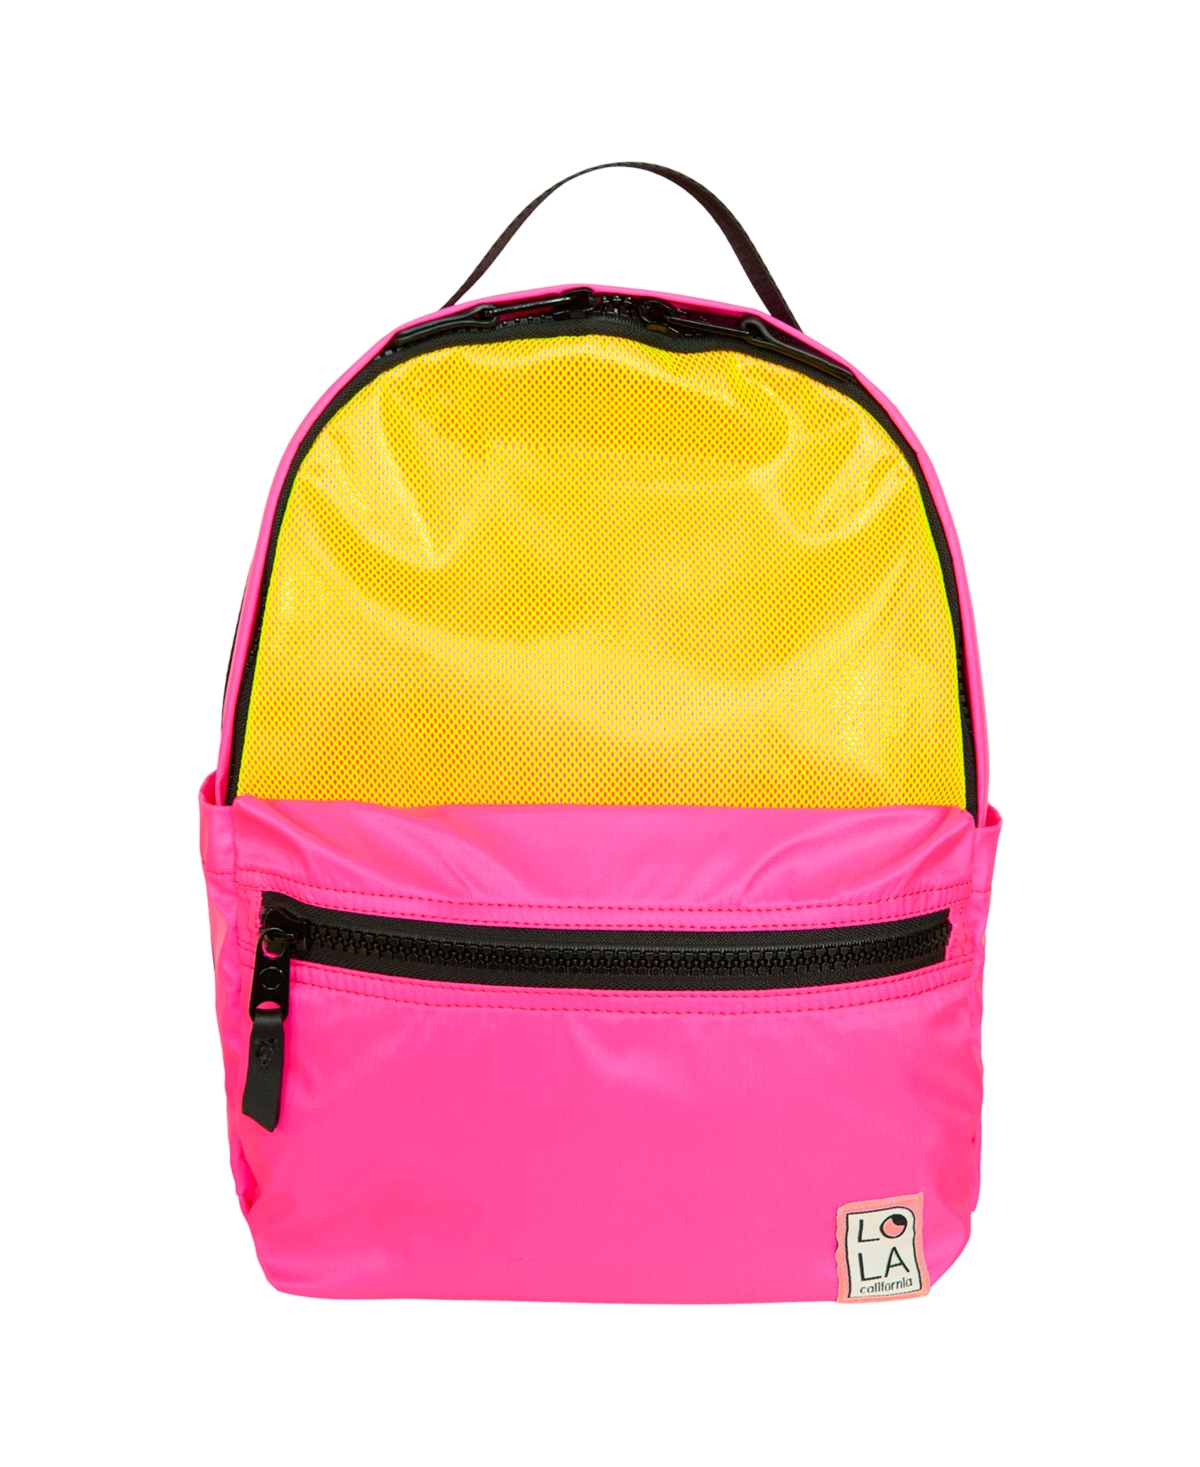 Lola Women's Starchild Small Backpack